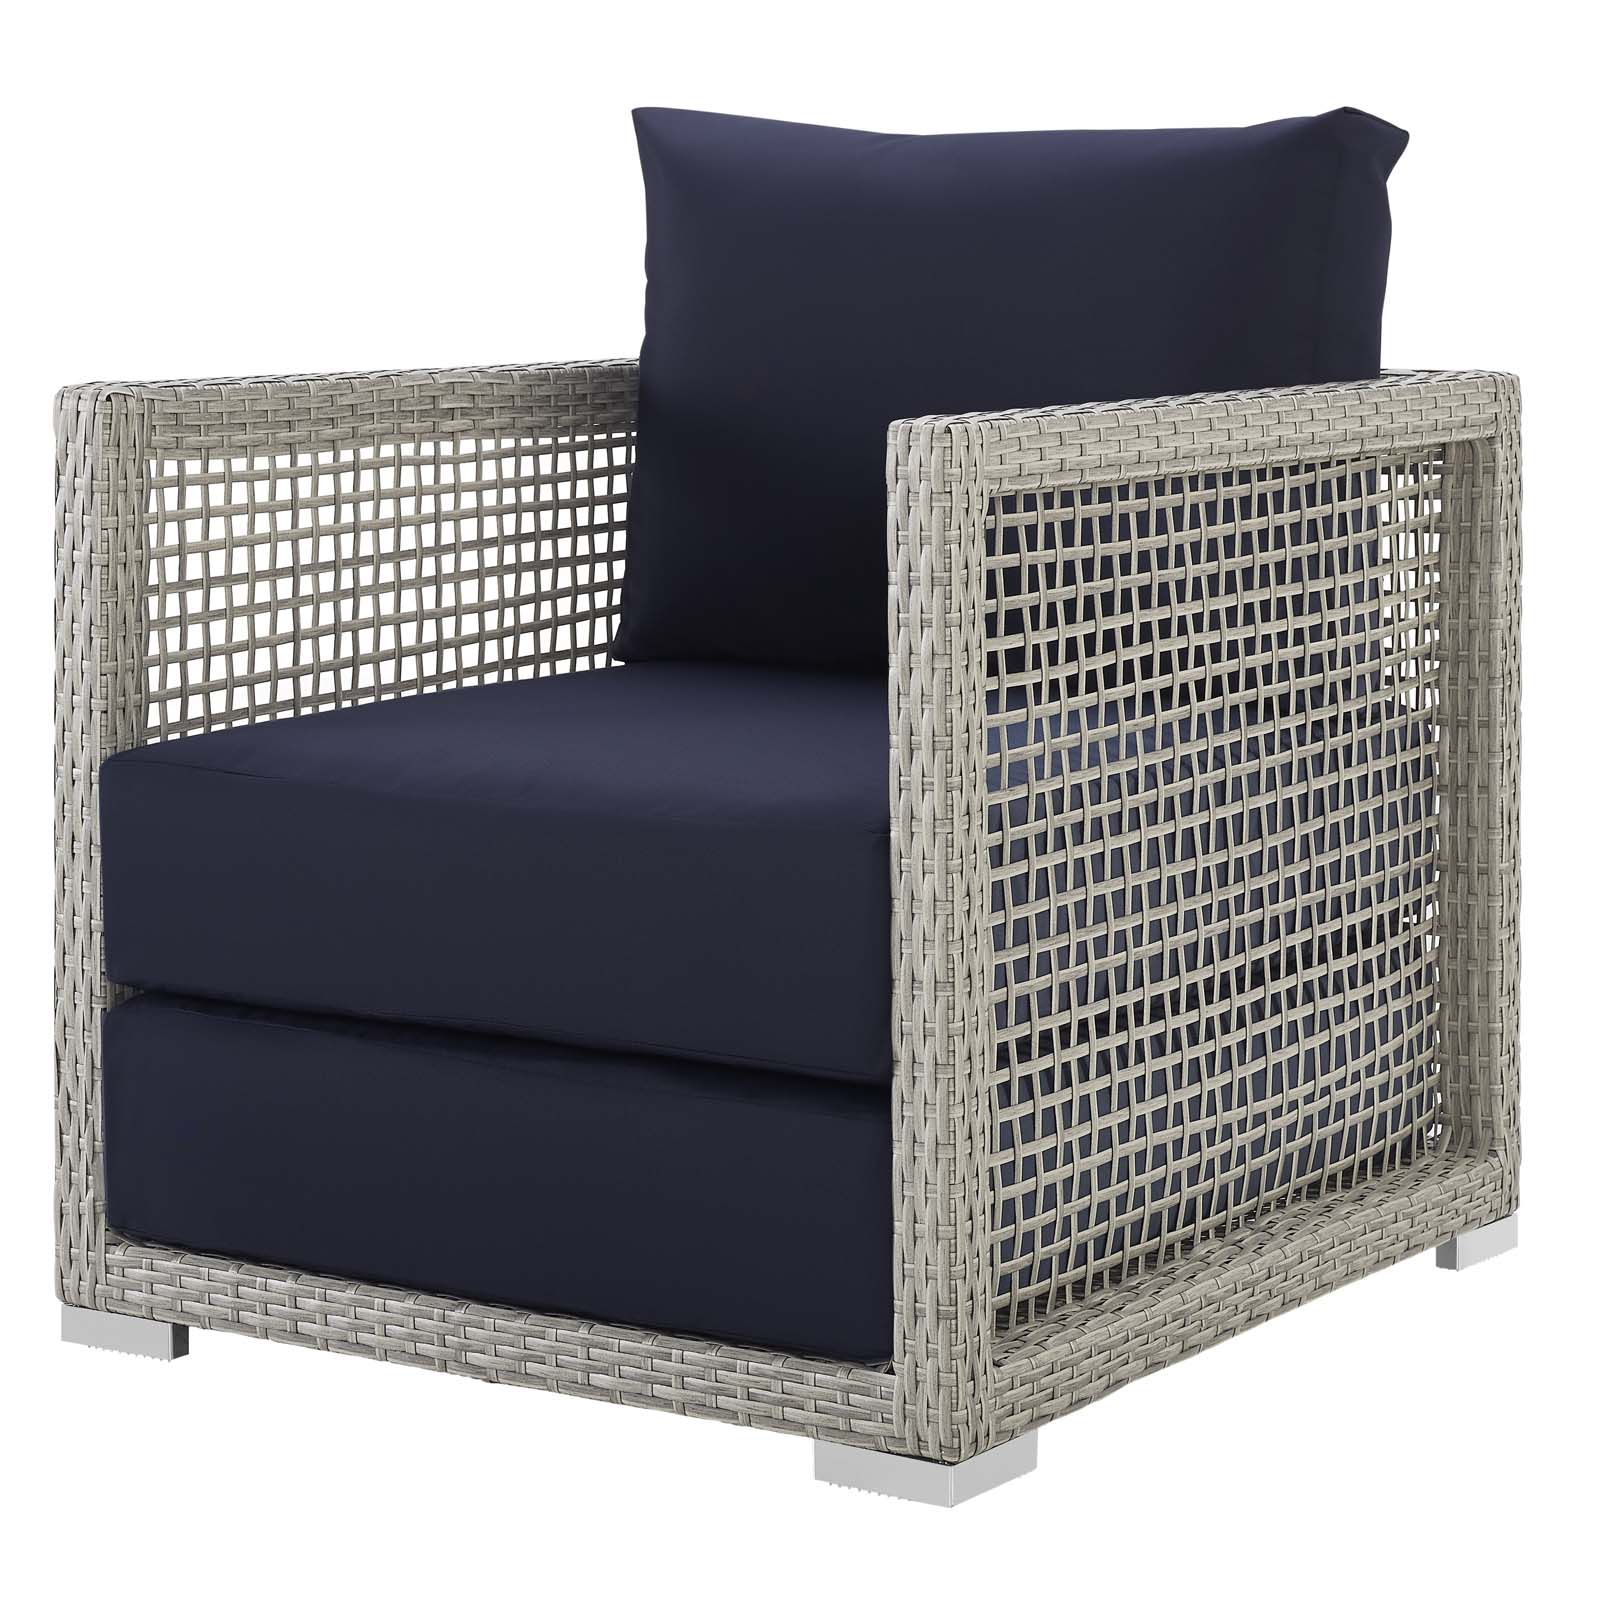 Modern Contemporary Urban Design Outdoor Patio Balcony Garden Furniture Lounge Chair Armchair, Rattan Wicker, Grey Gray - image 1 of 6